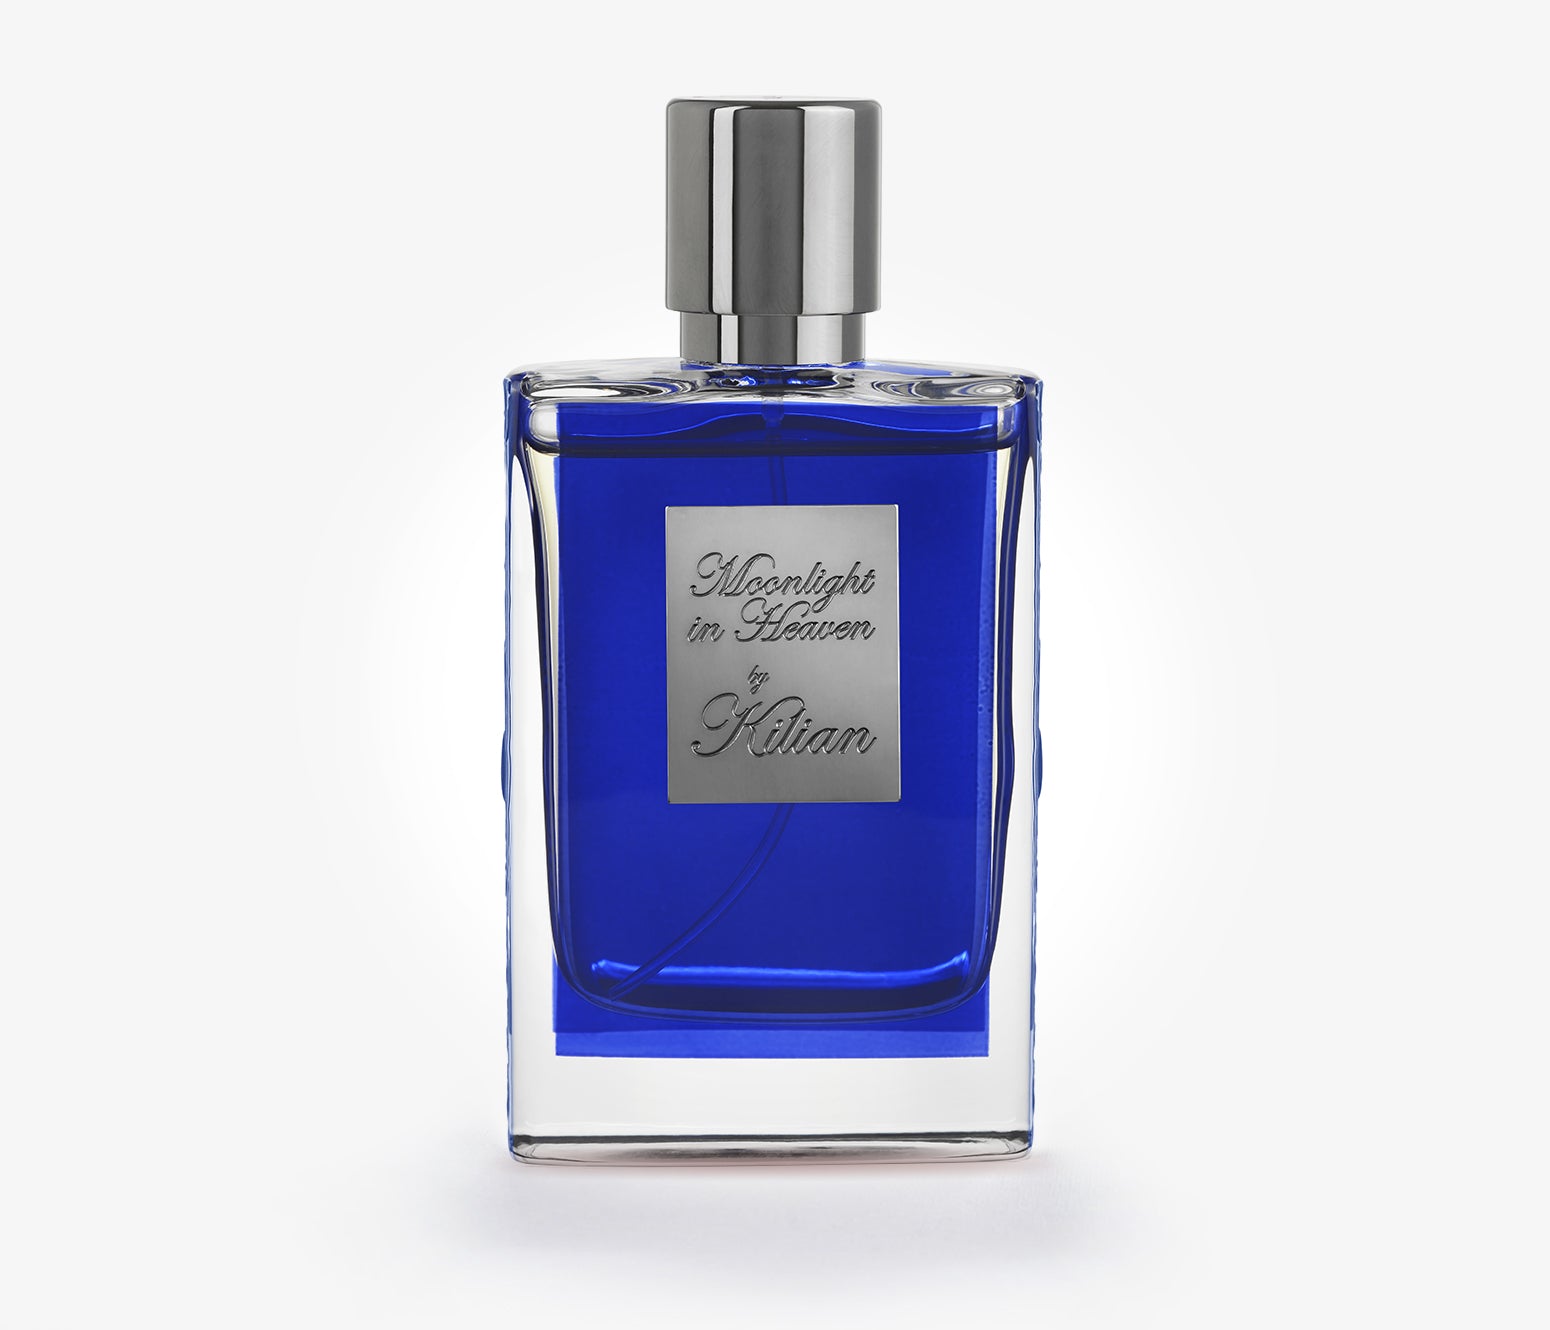 Kilian Paris - Moonlight to Heaven - 50ml - QDF001 - Product Image - Fragrance - Les Senteurs